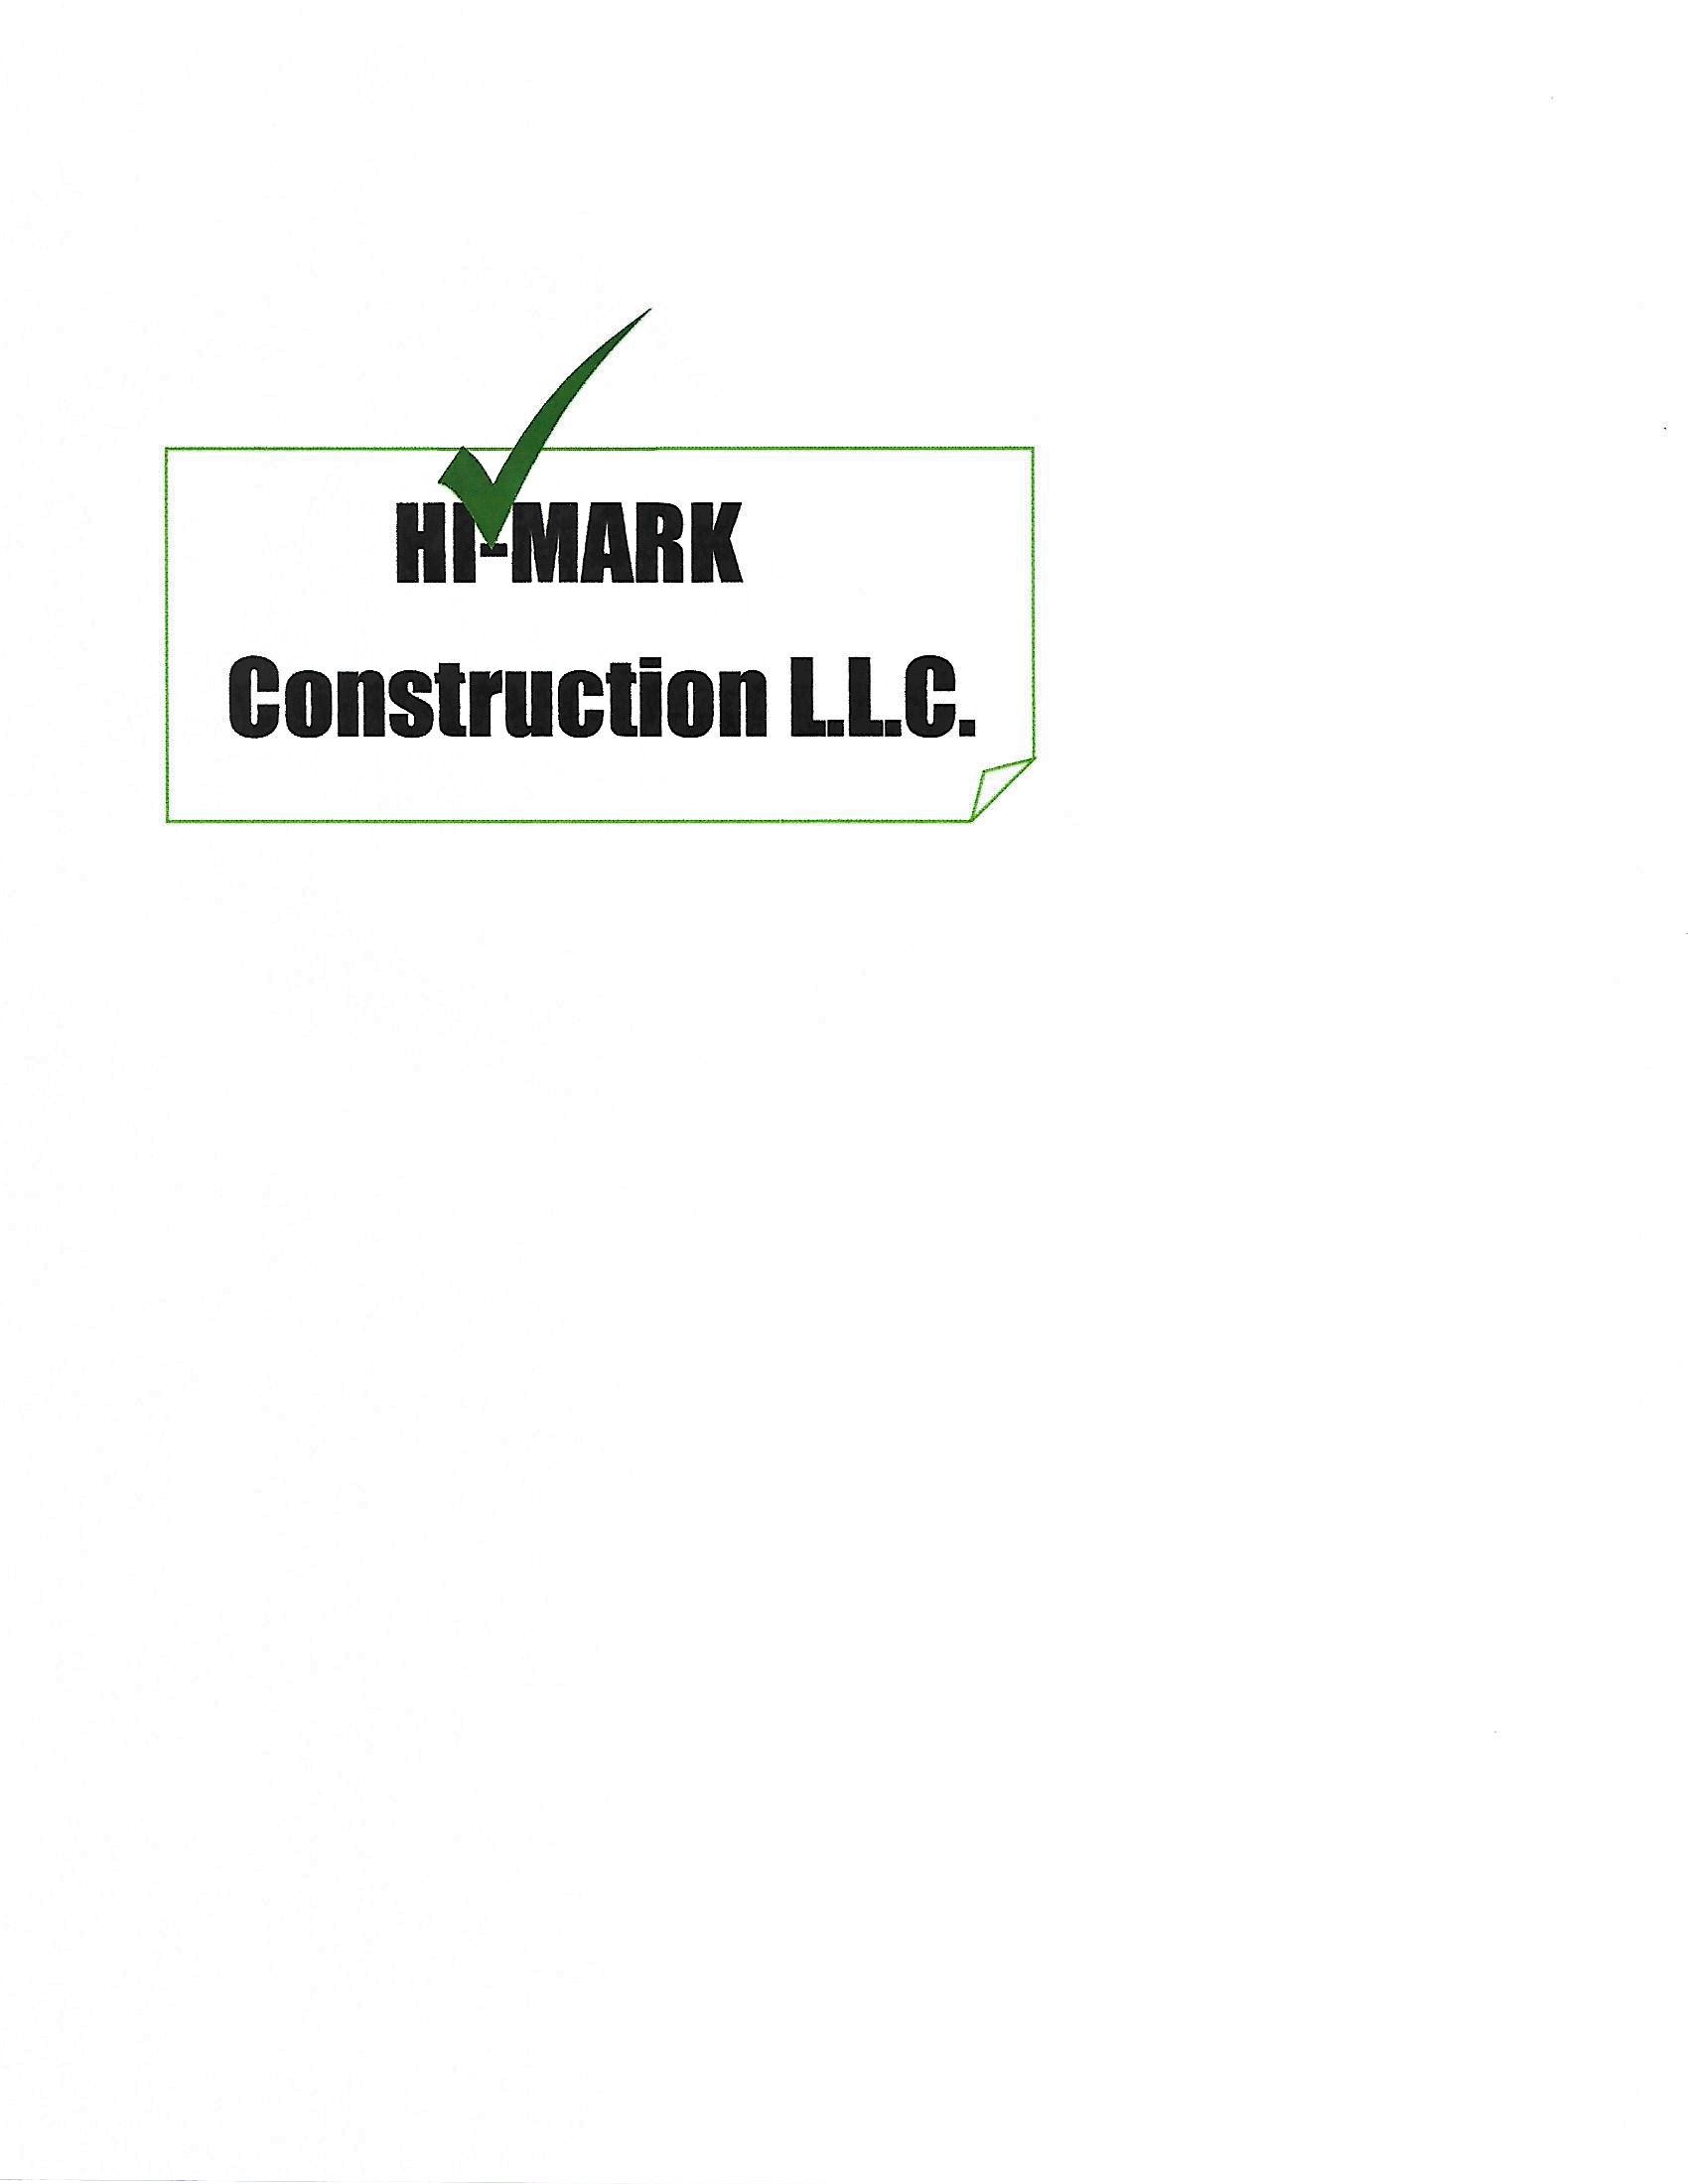 Hi-Mark Construction, LLC Logo